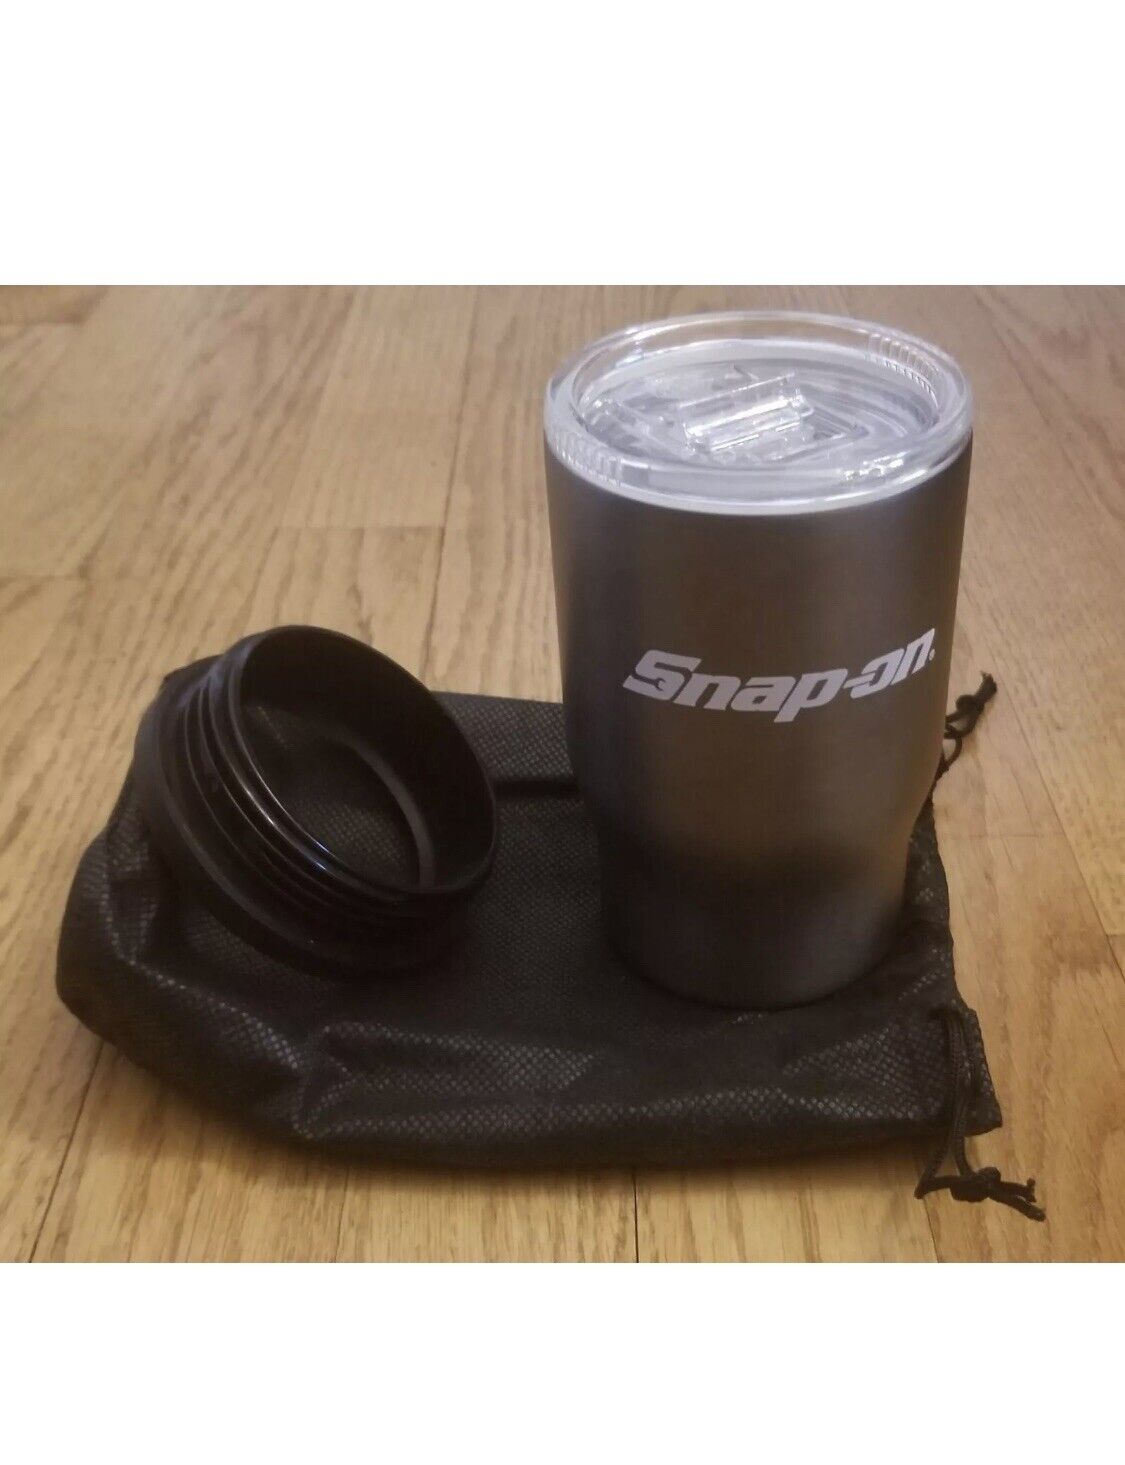 New Snap-on Tools Titanium 3 in 1 Vacuum Insulated Tumbler Travel Mug Can Koozie